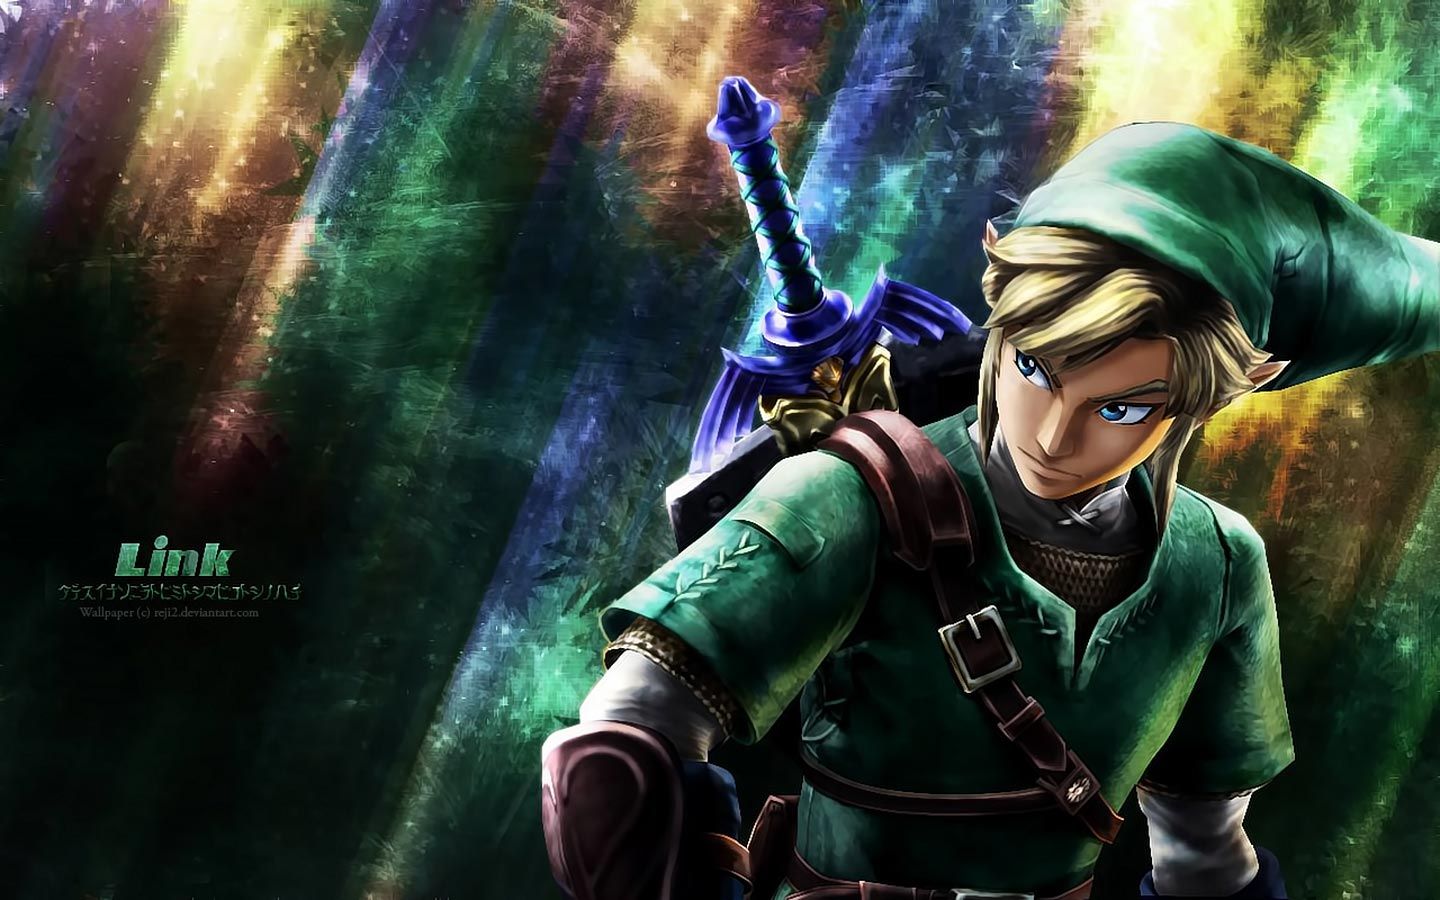 Child video game protagonists - The Legend Of Zelda (Link)